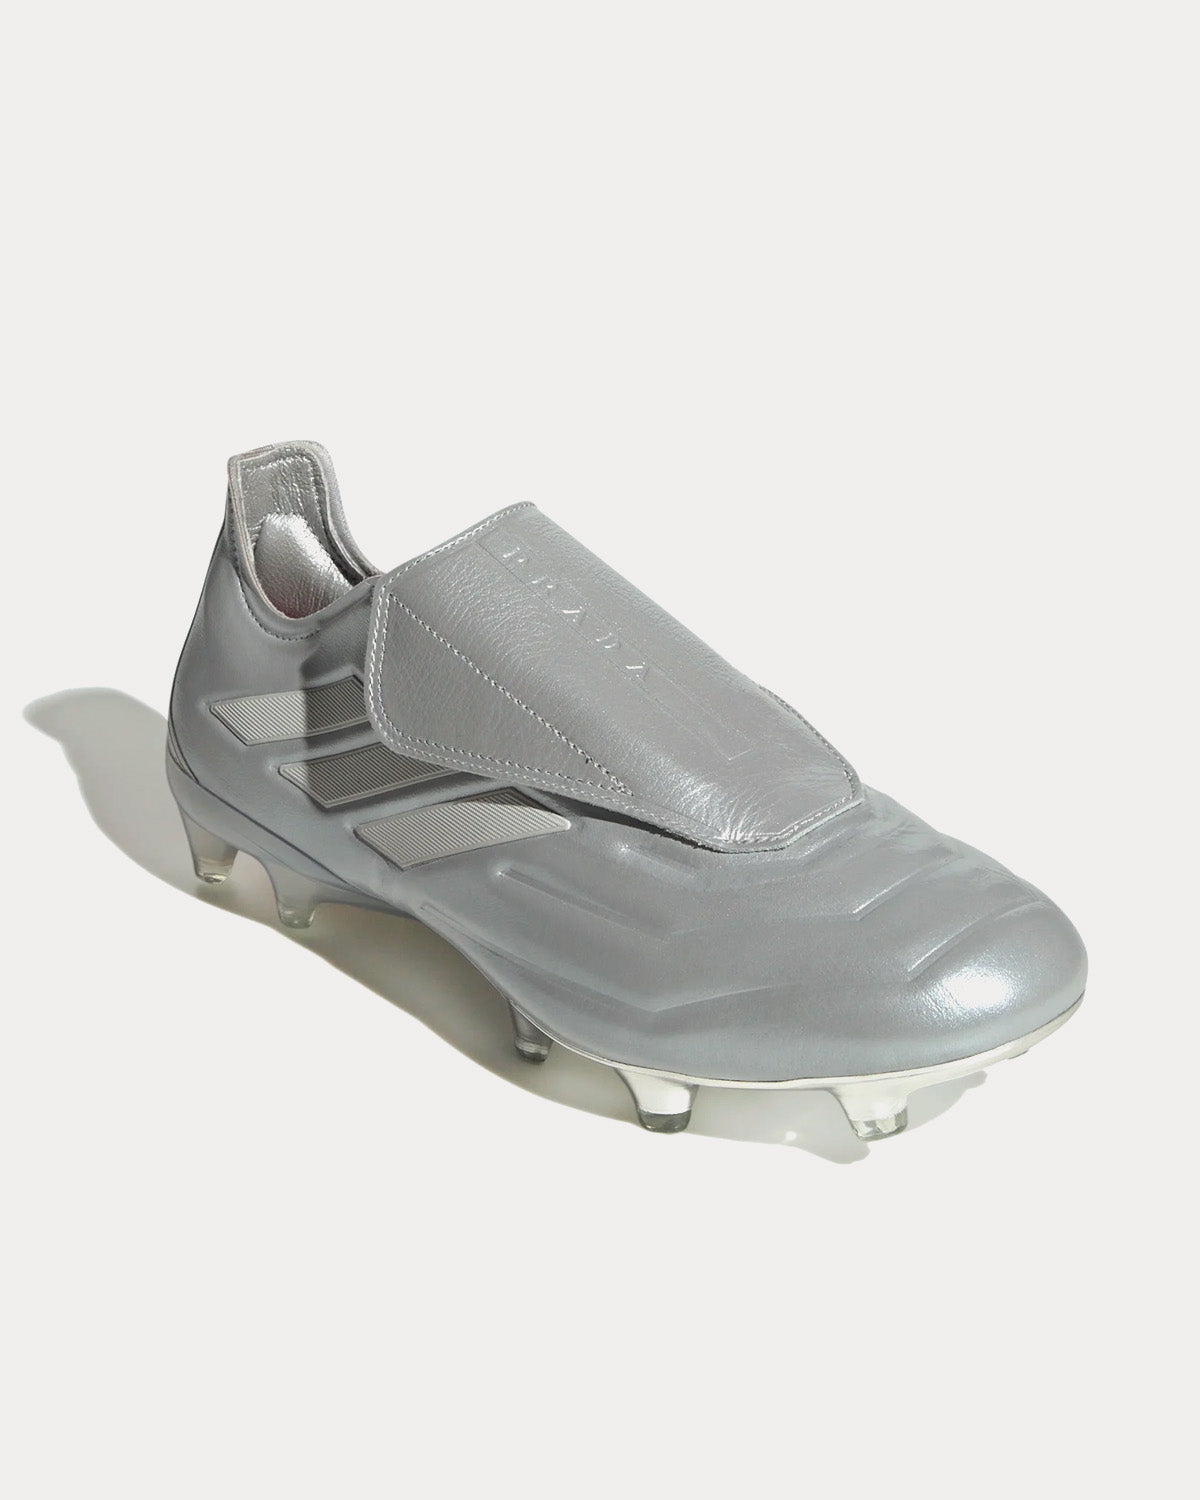 Adidas x Prada - Copa Pure Luxury.1 Firm Ground Silver Metallic / Clear Grey / Red Football Boots